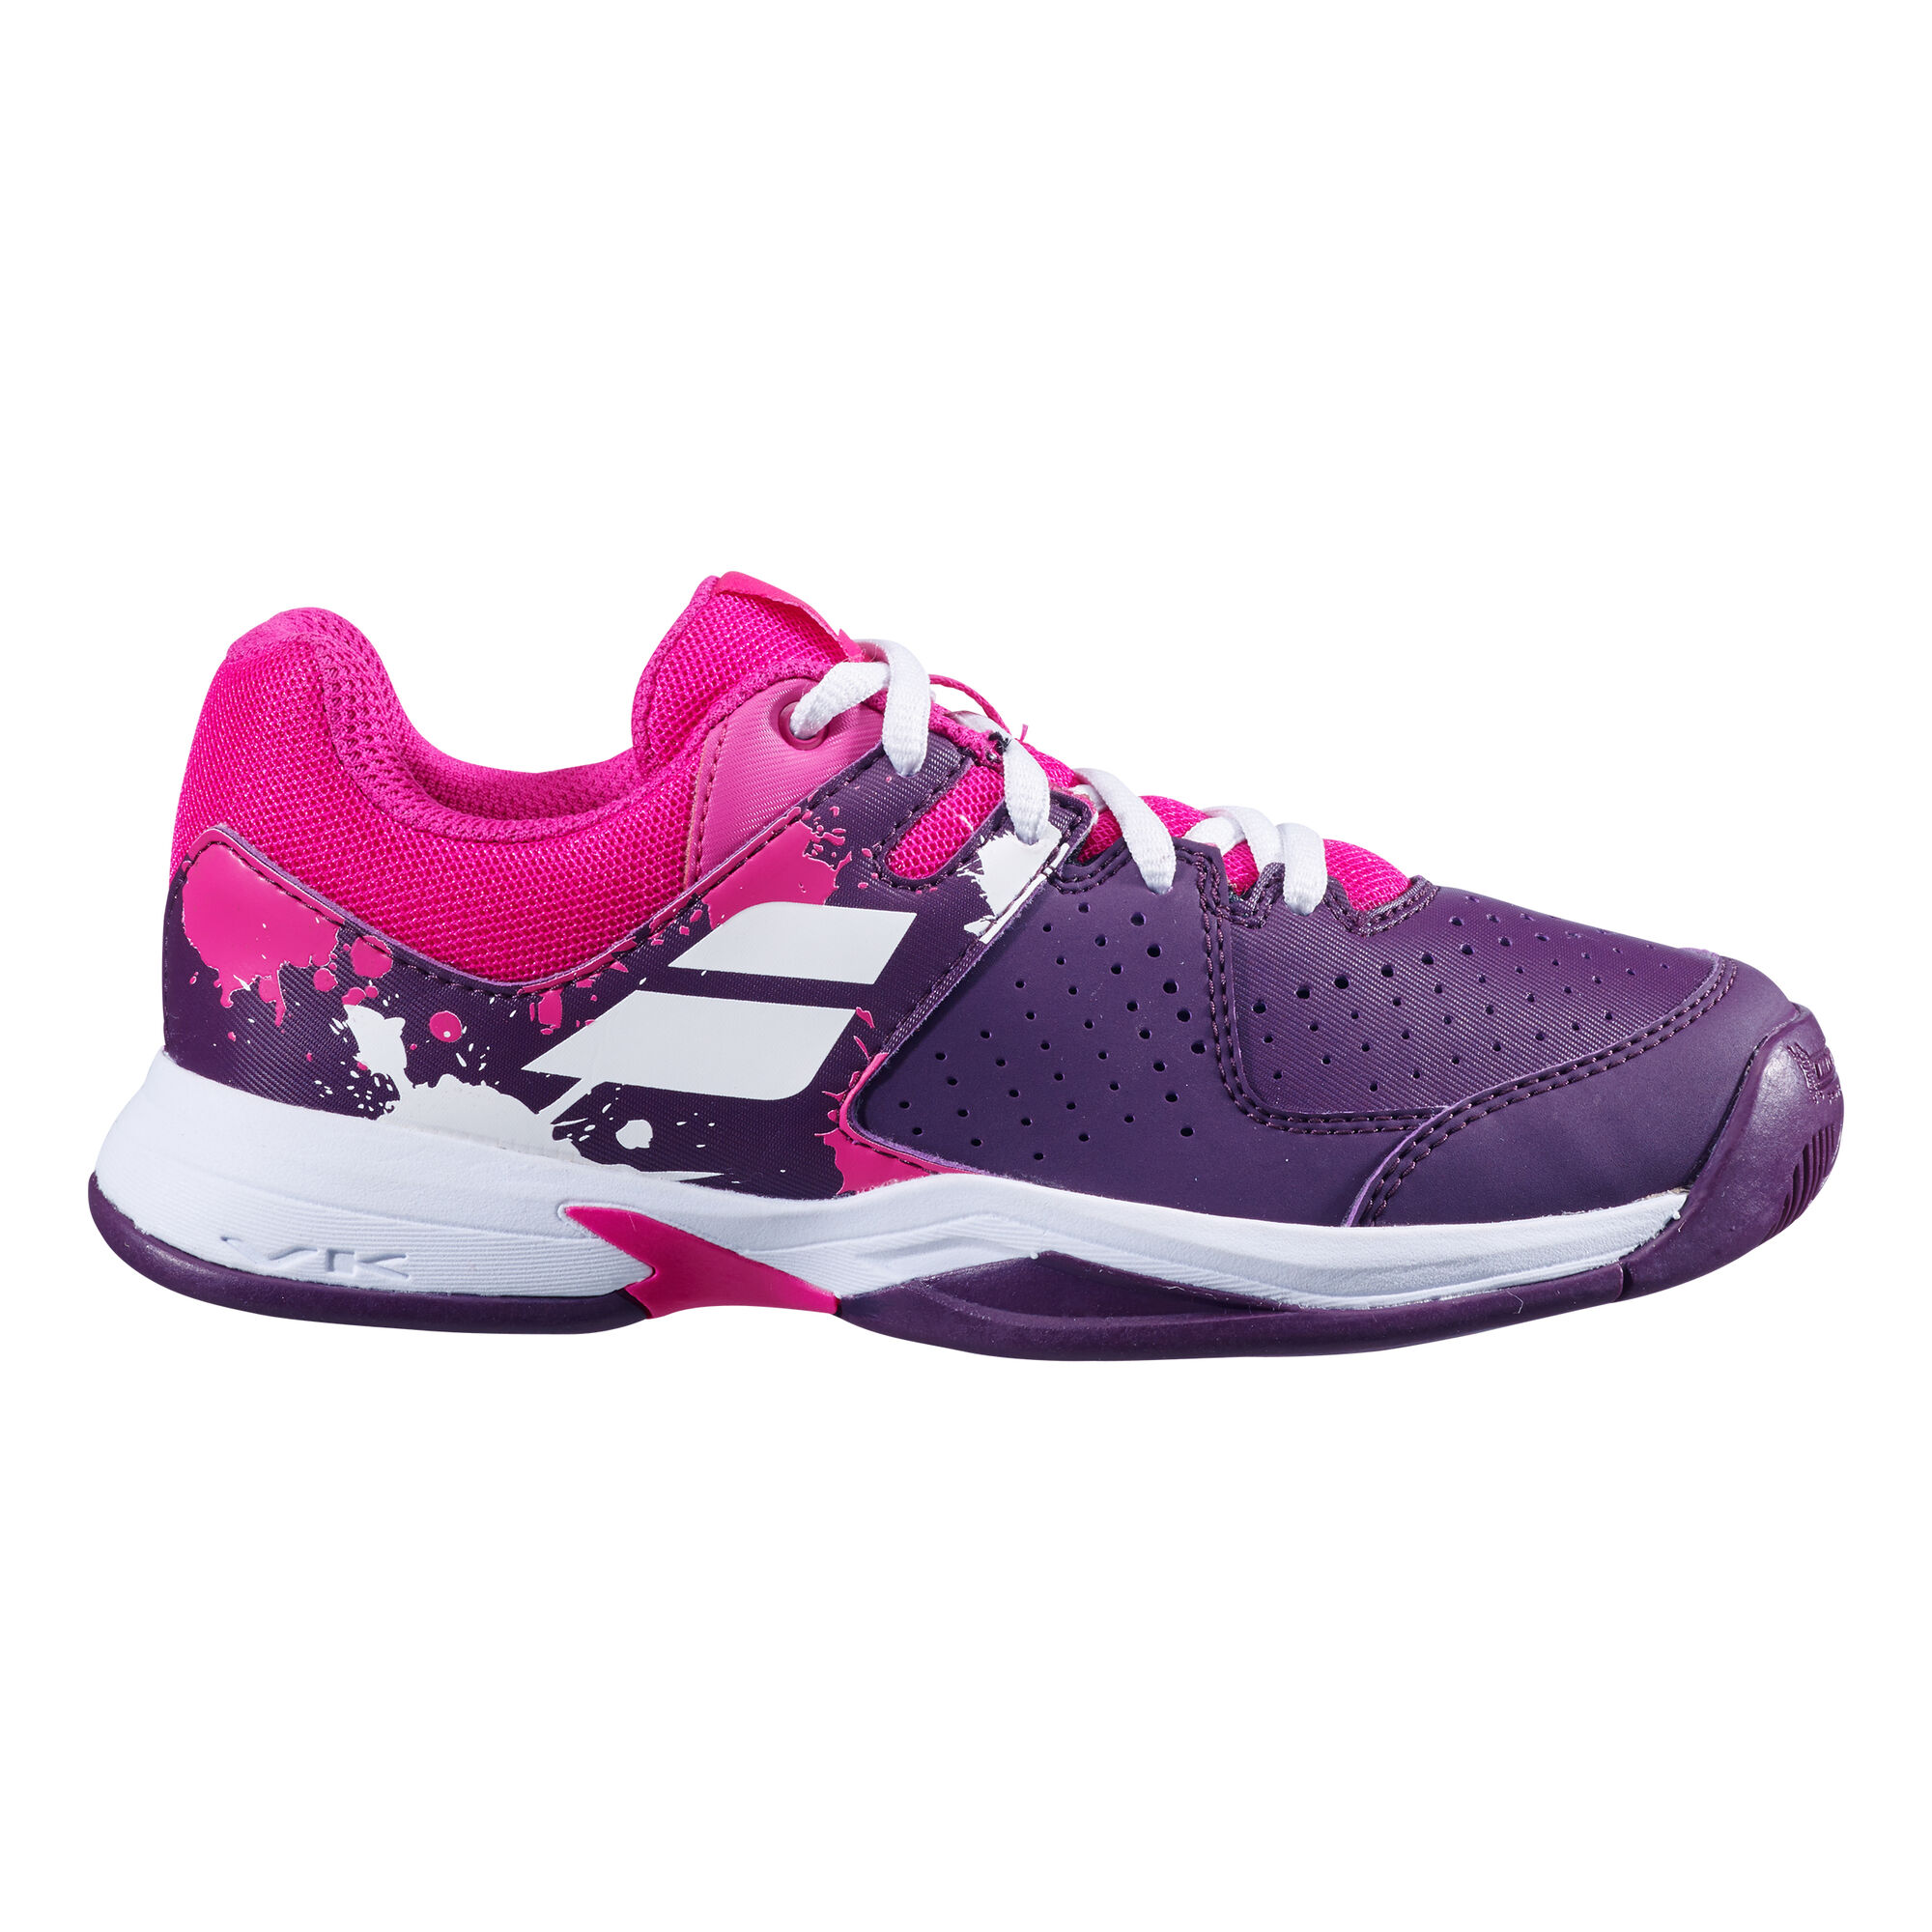 Buy Babolat Pulsion All Court Shoe Kids Violet, Pink online | Tennis ...